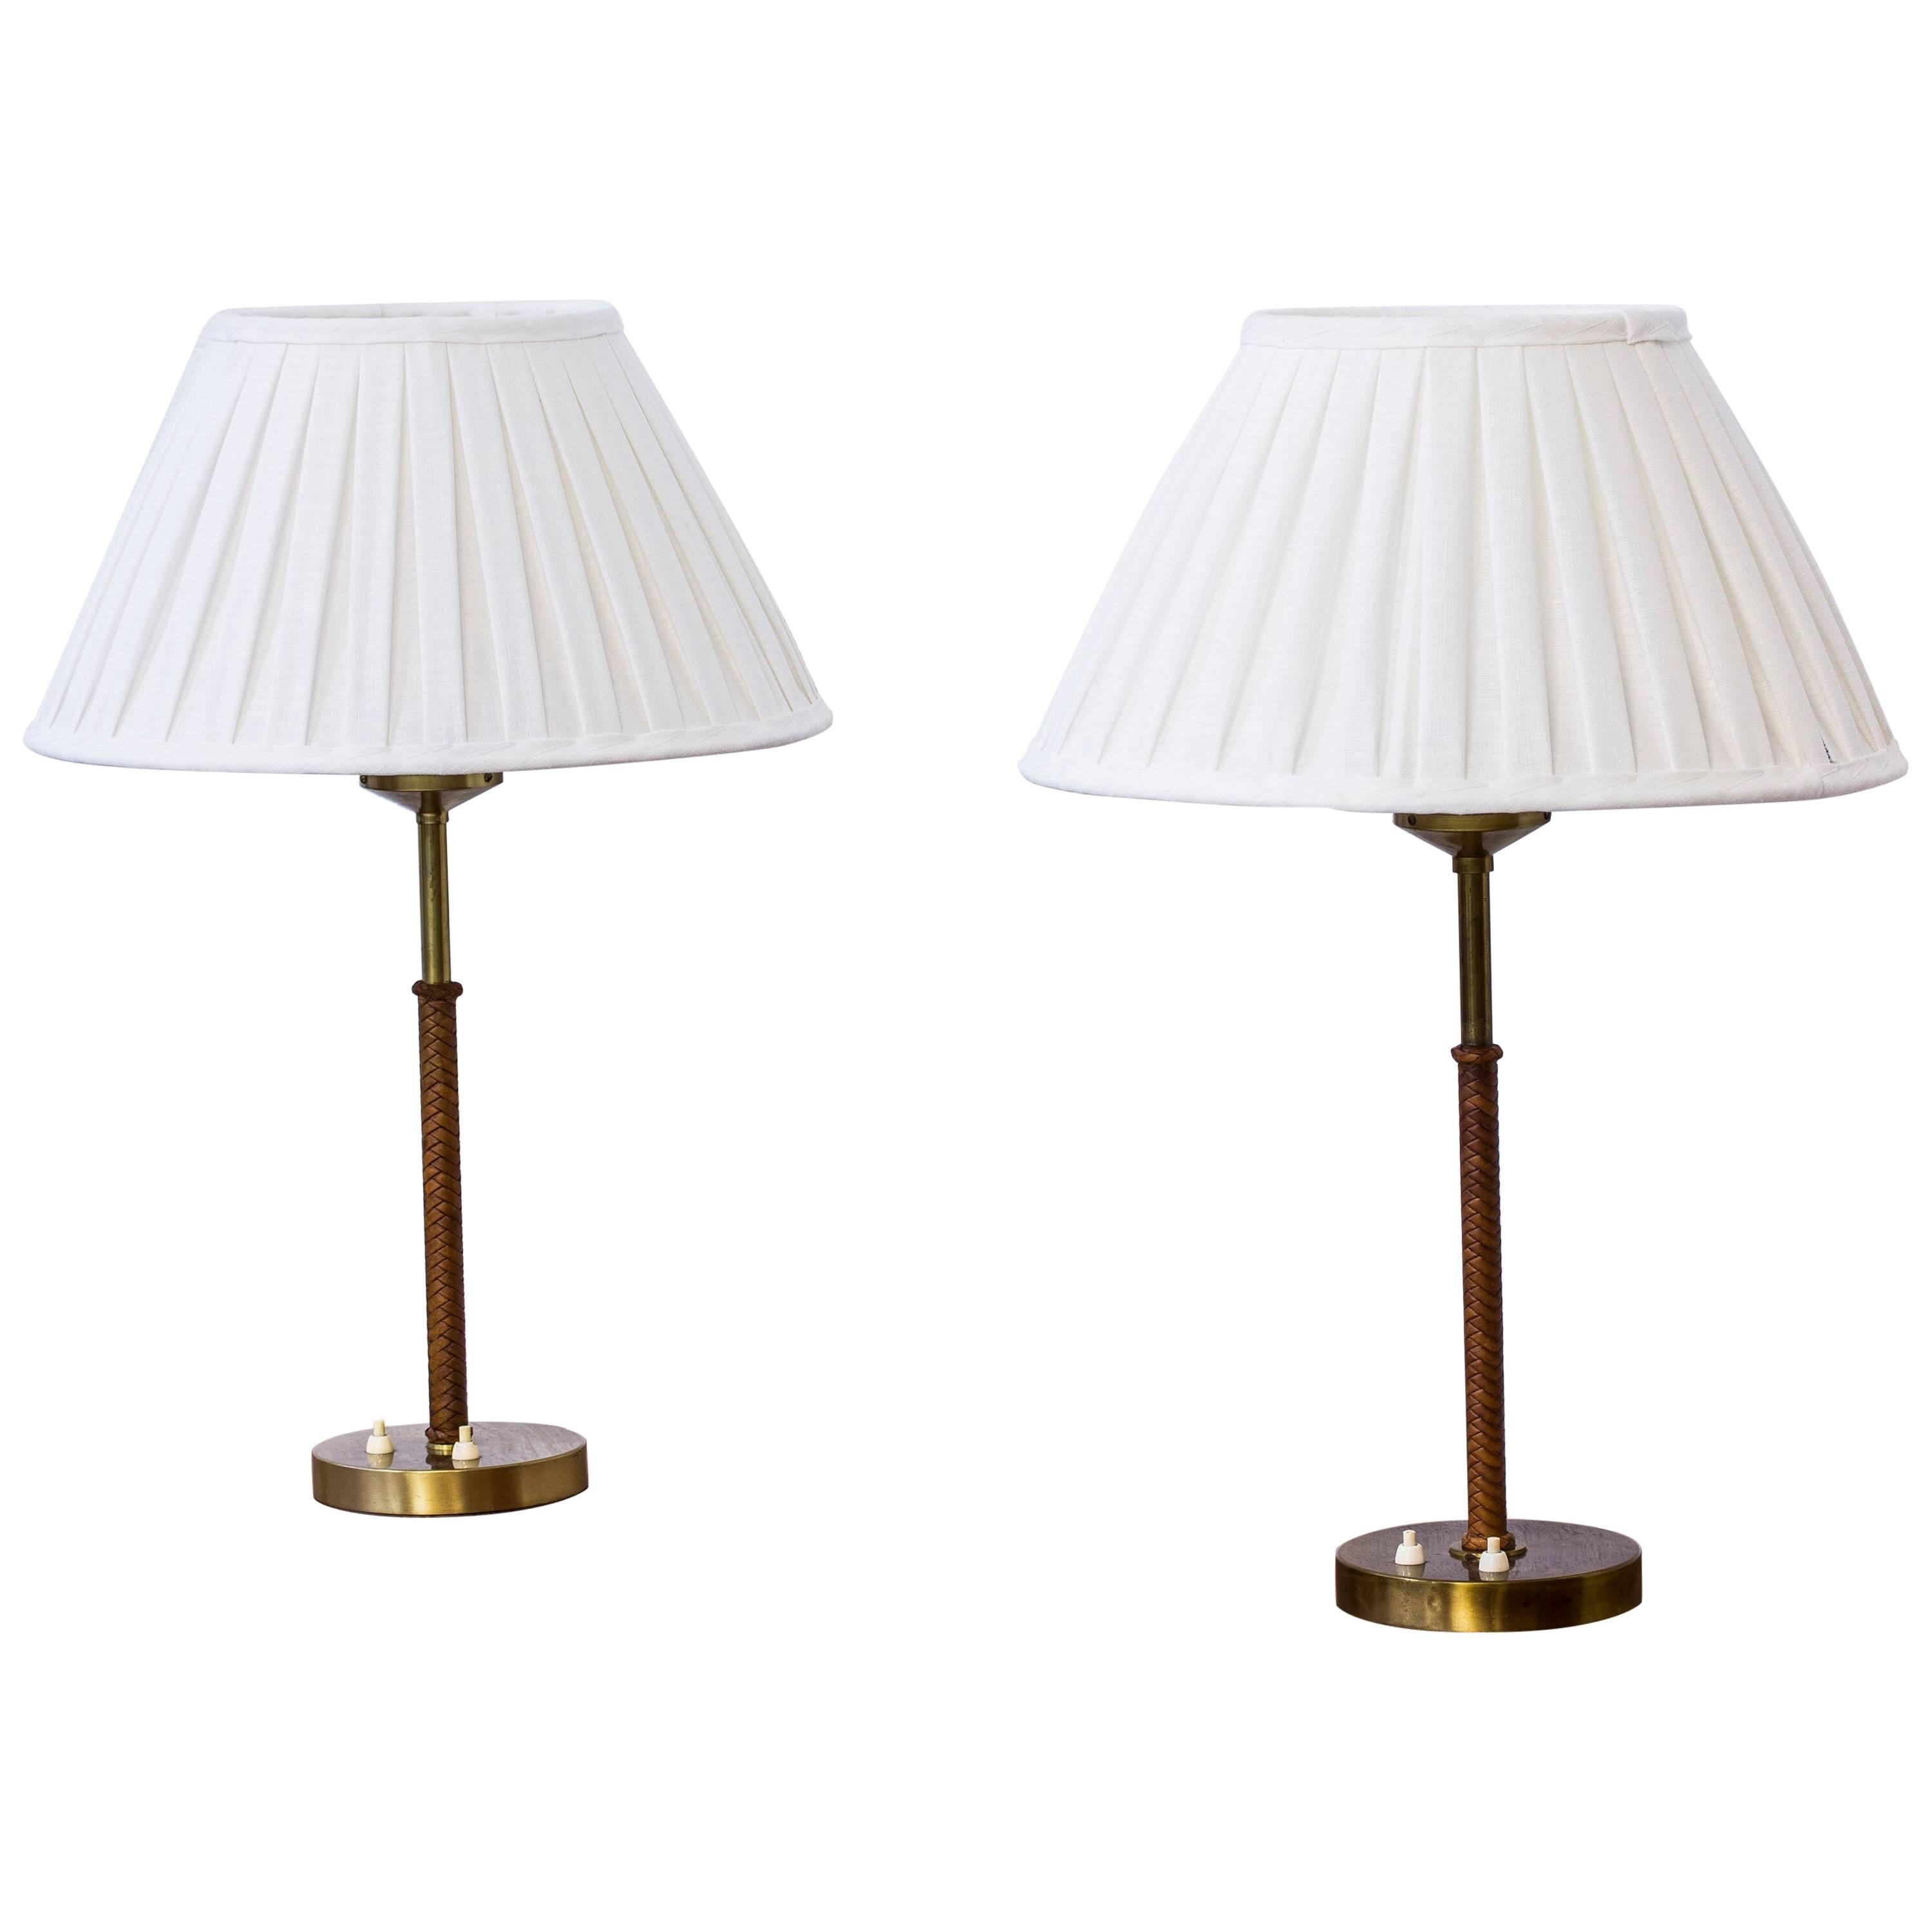 Pair of Table Lamps by Åke Hultgren for Nordiska Kompaniet Nk, Sweden